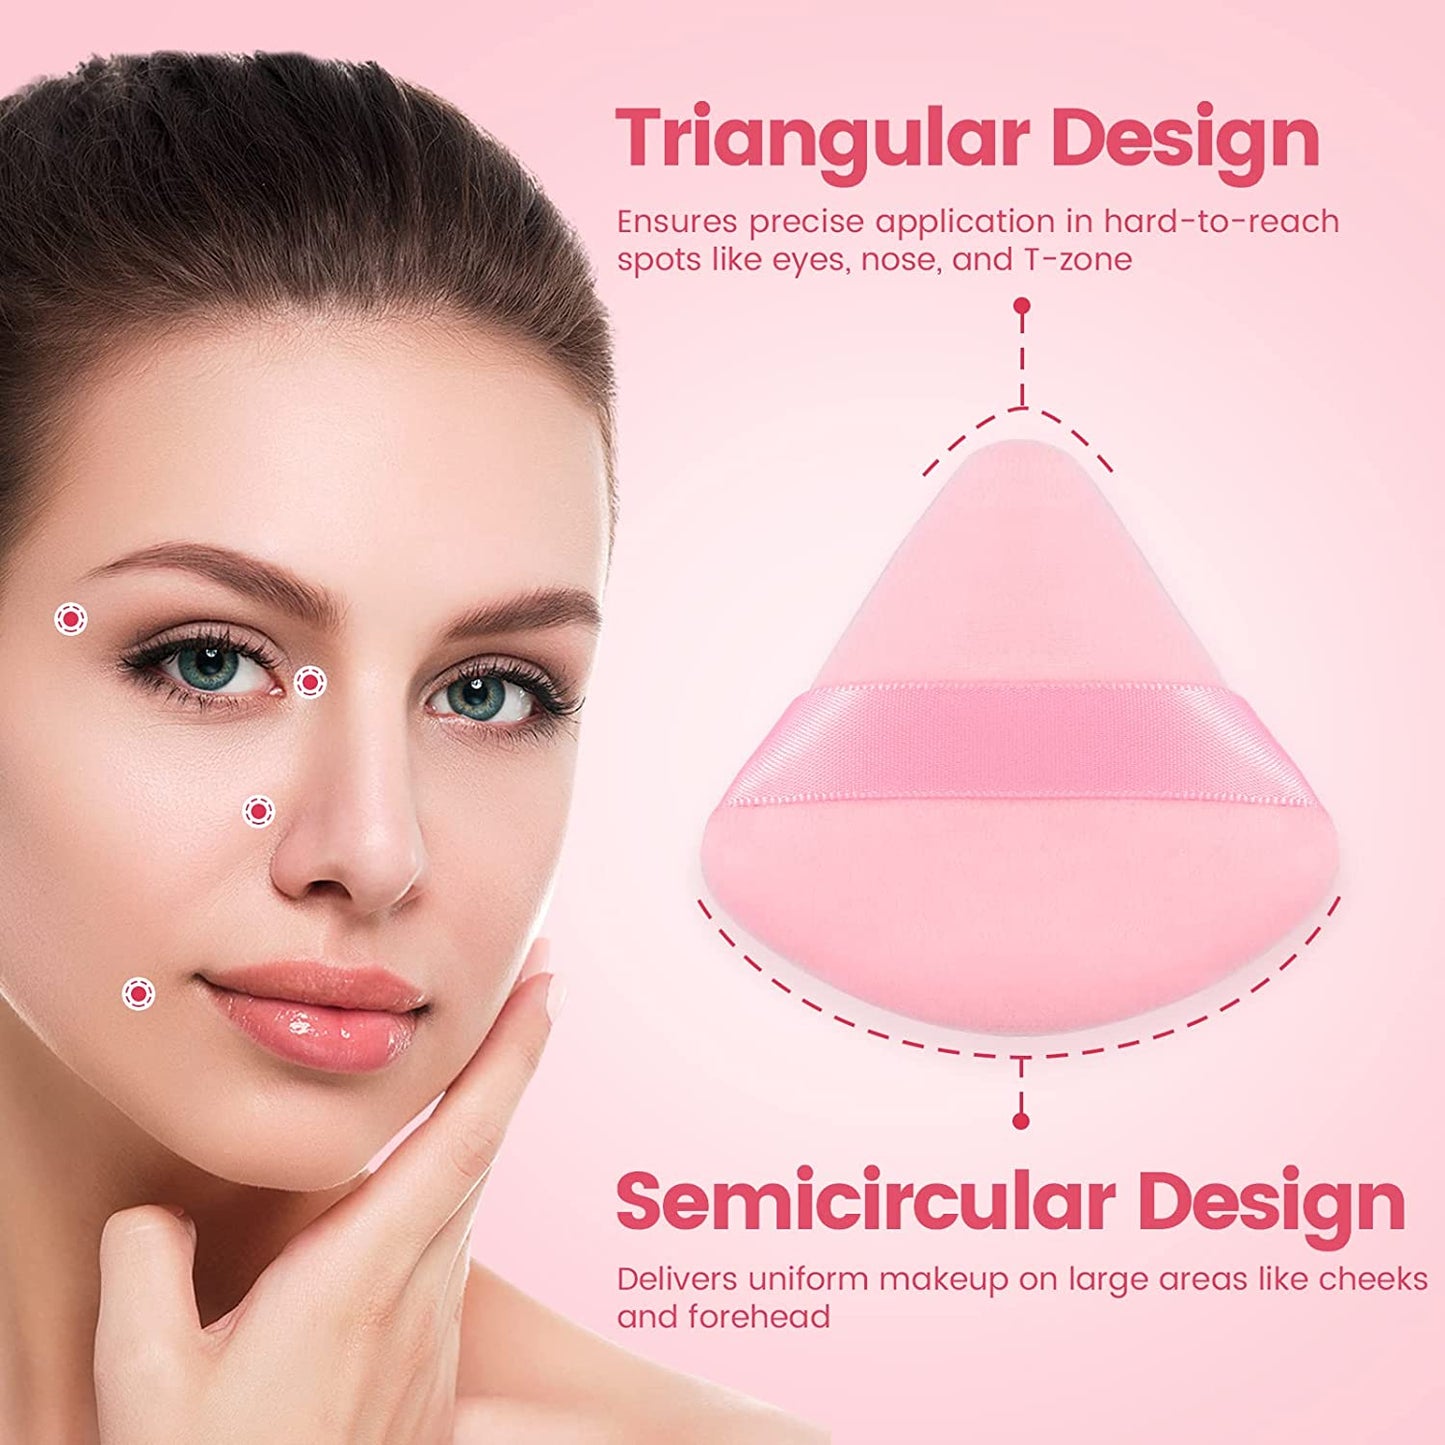 BEAKEY Powder Puffs for Facial Makeup, Triangle Beauty Sponge for Powder & Foundation, 12 Pcs Pink - BEAKEY